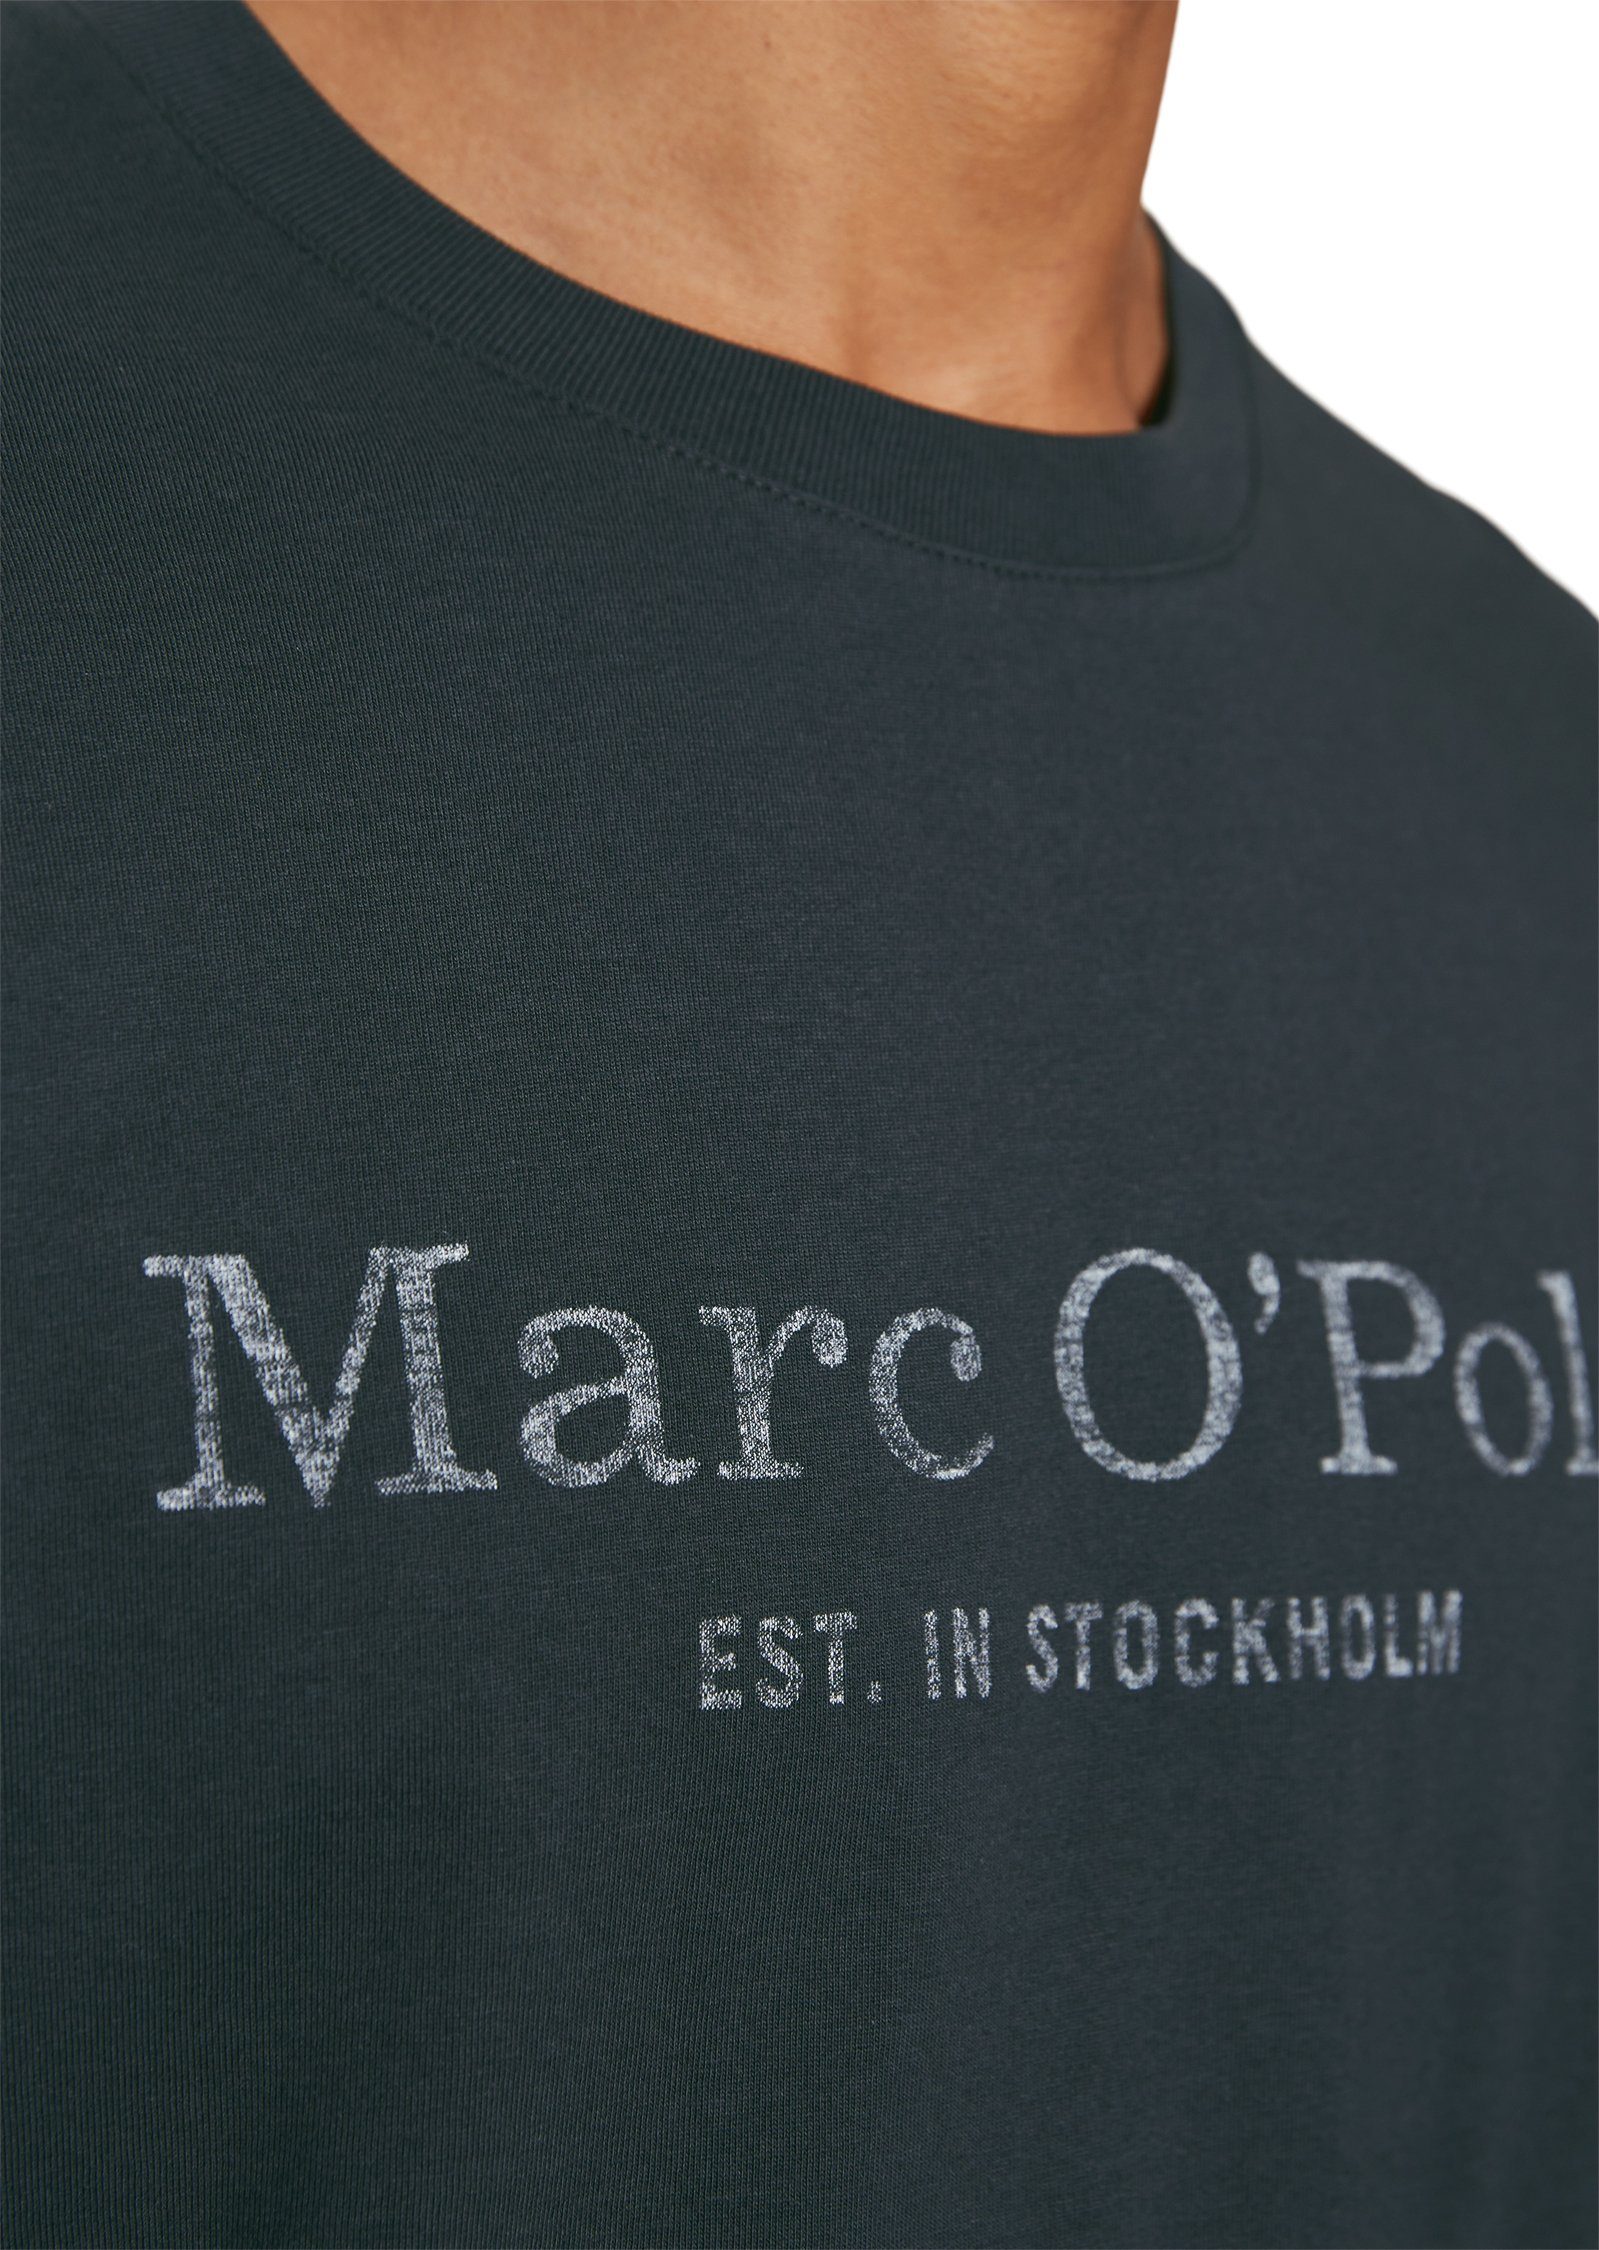 Marc Langarmshirt dark O'Polo navy